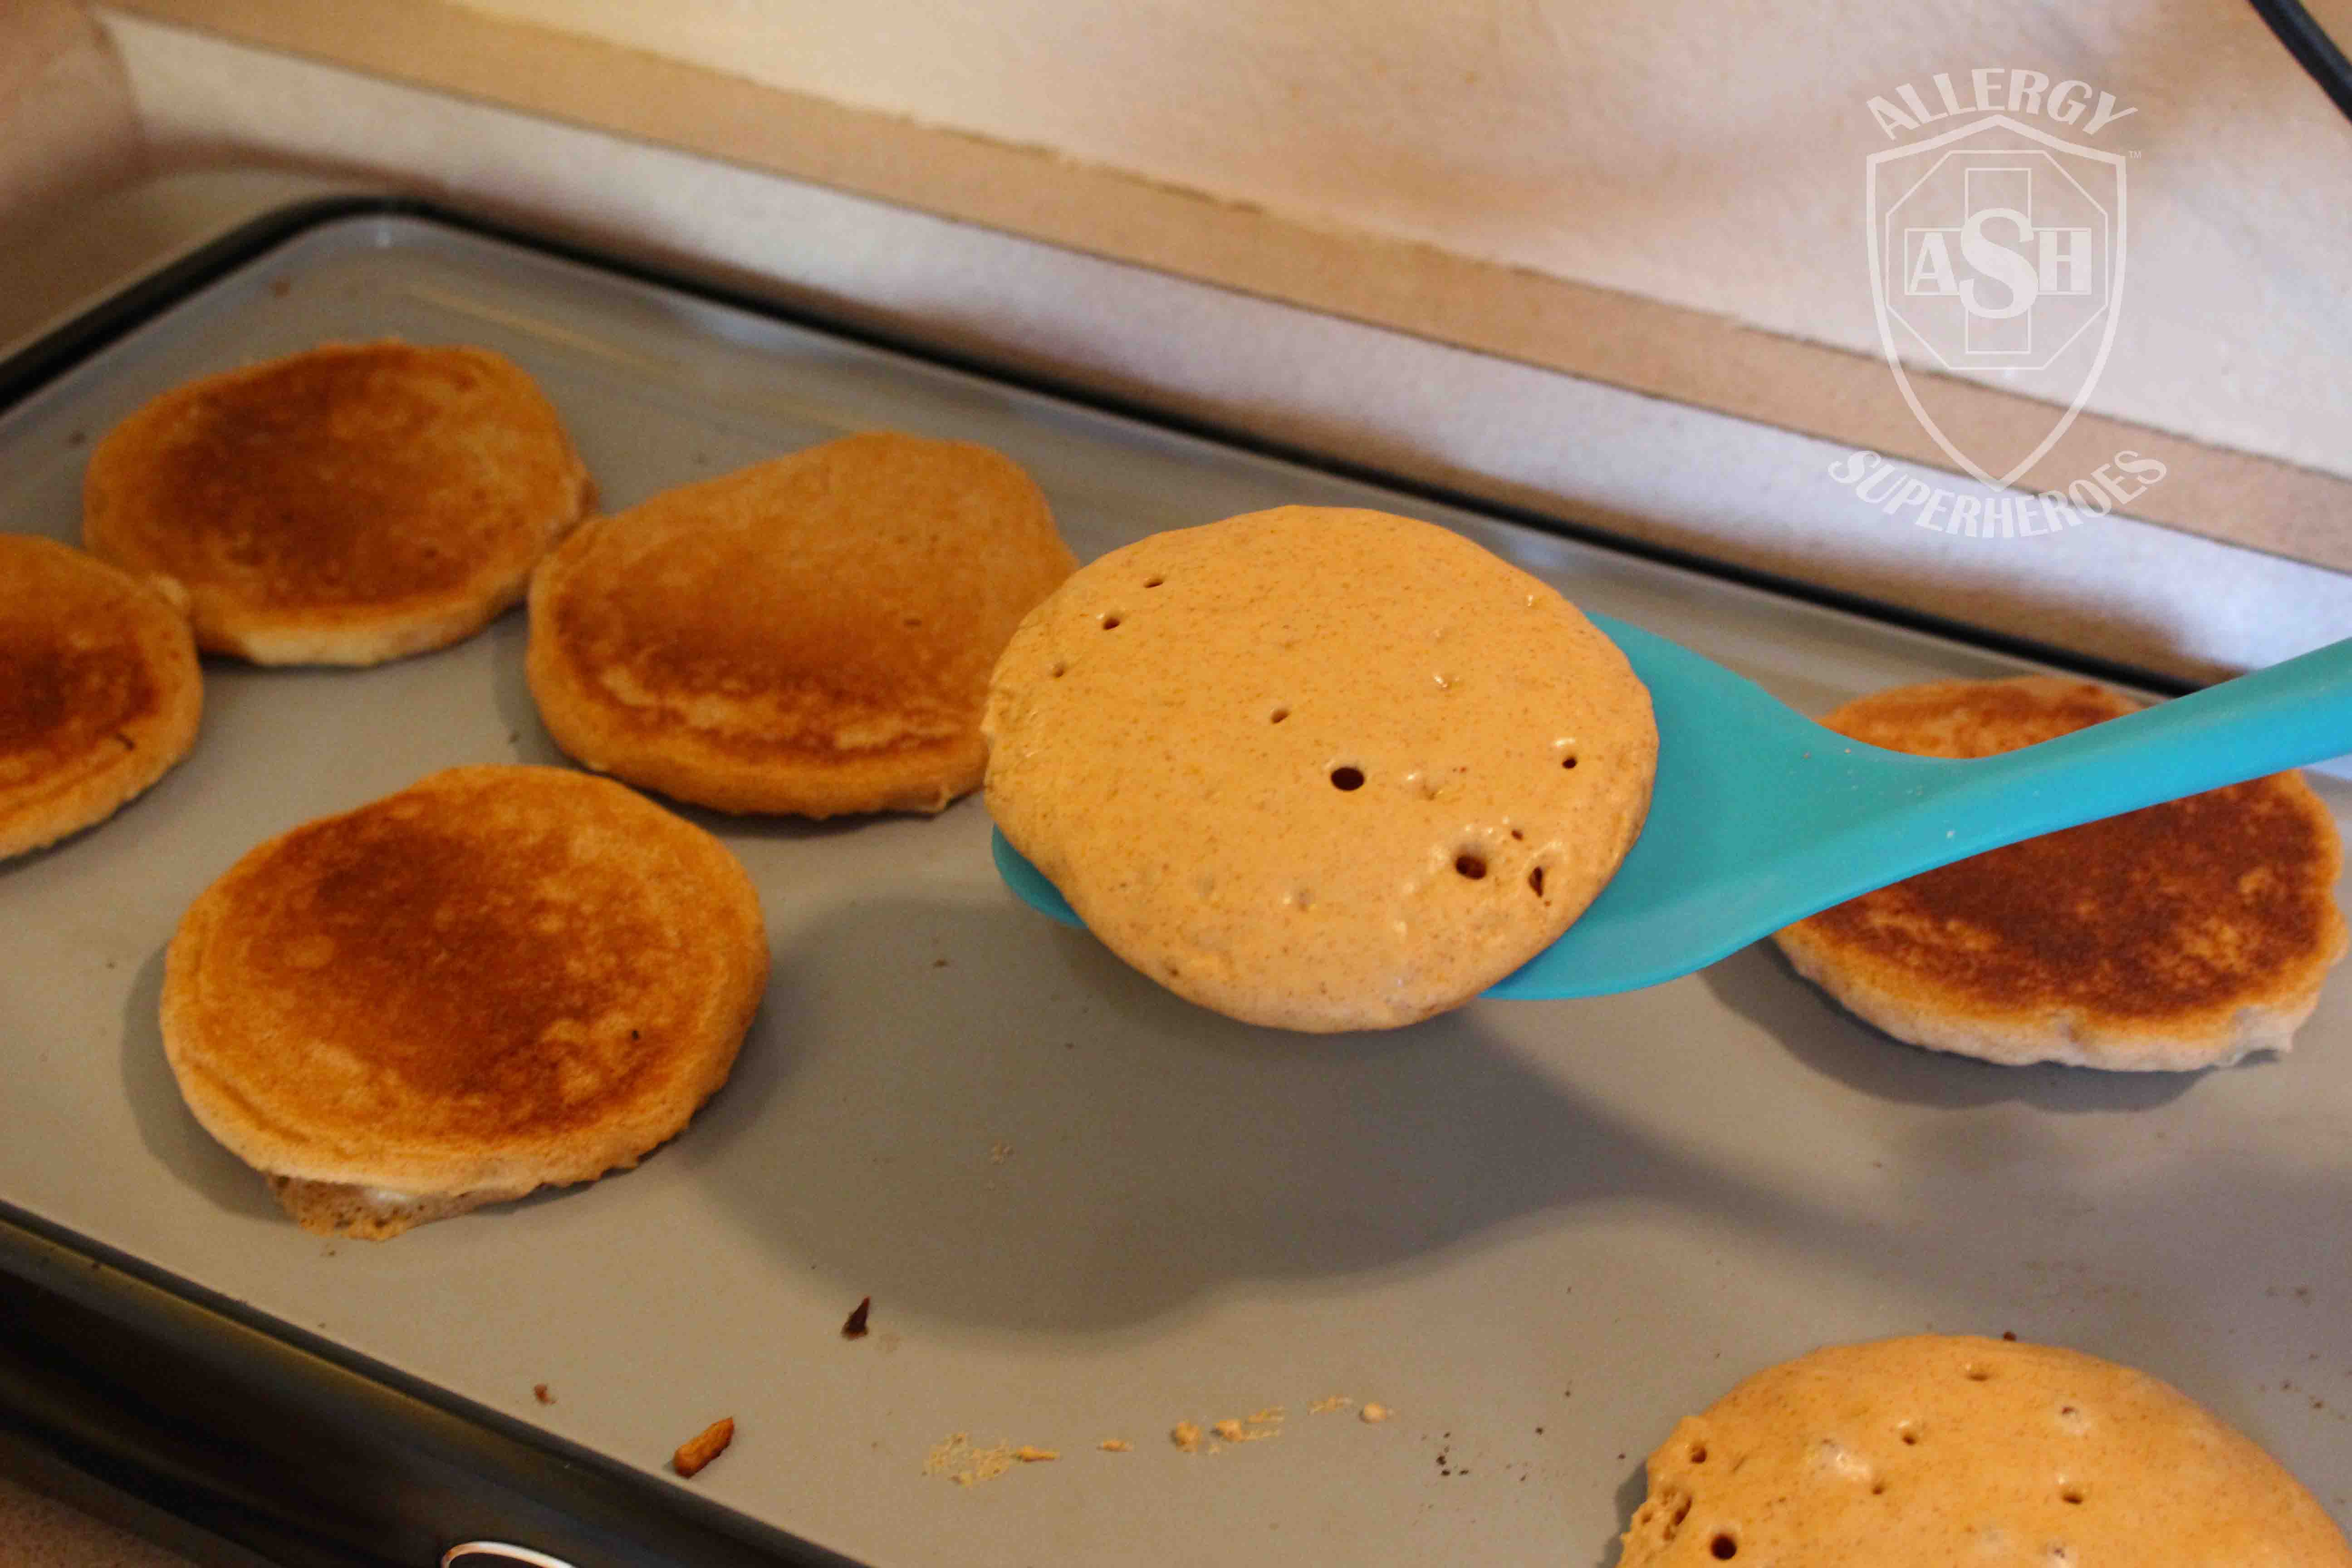 Gluten-Free Pumpkin Pancakes | a tasty seasonal breakfast | by Allergy Superheroes